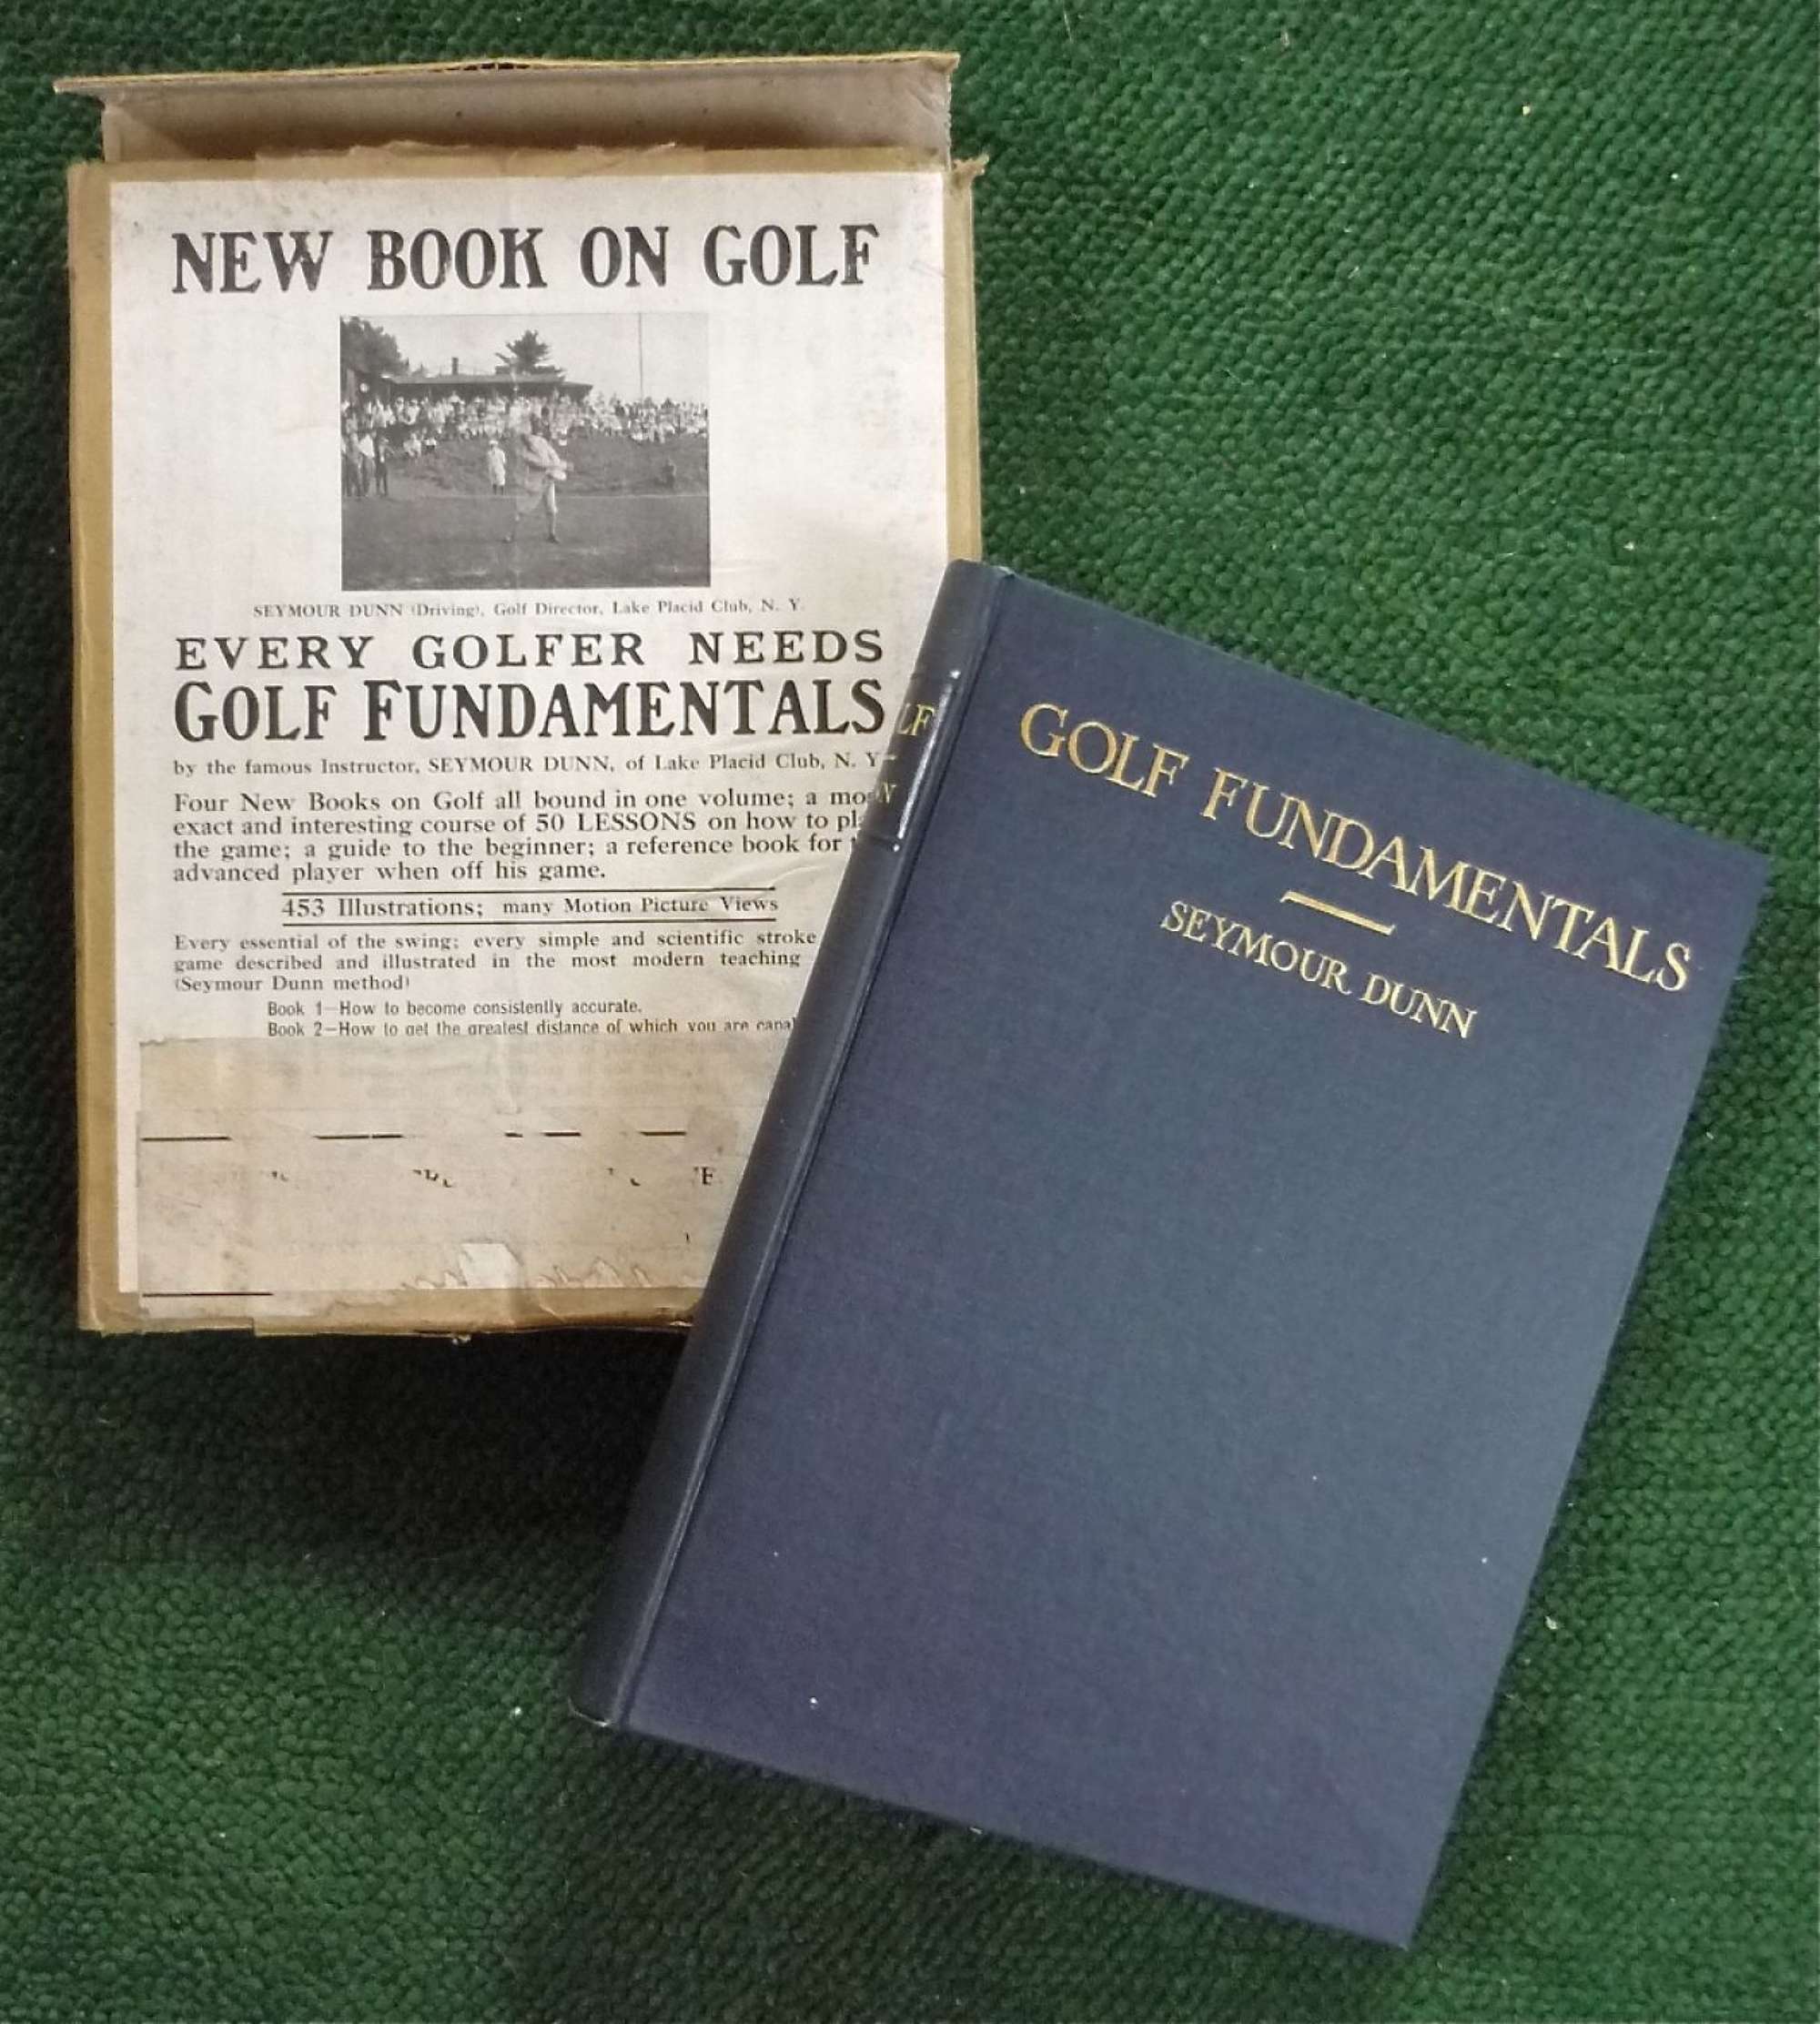 Golf Fundamentals by Seymour Dunn